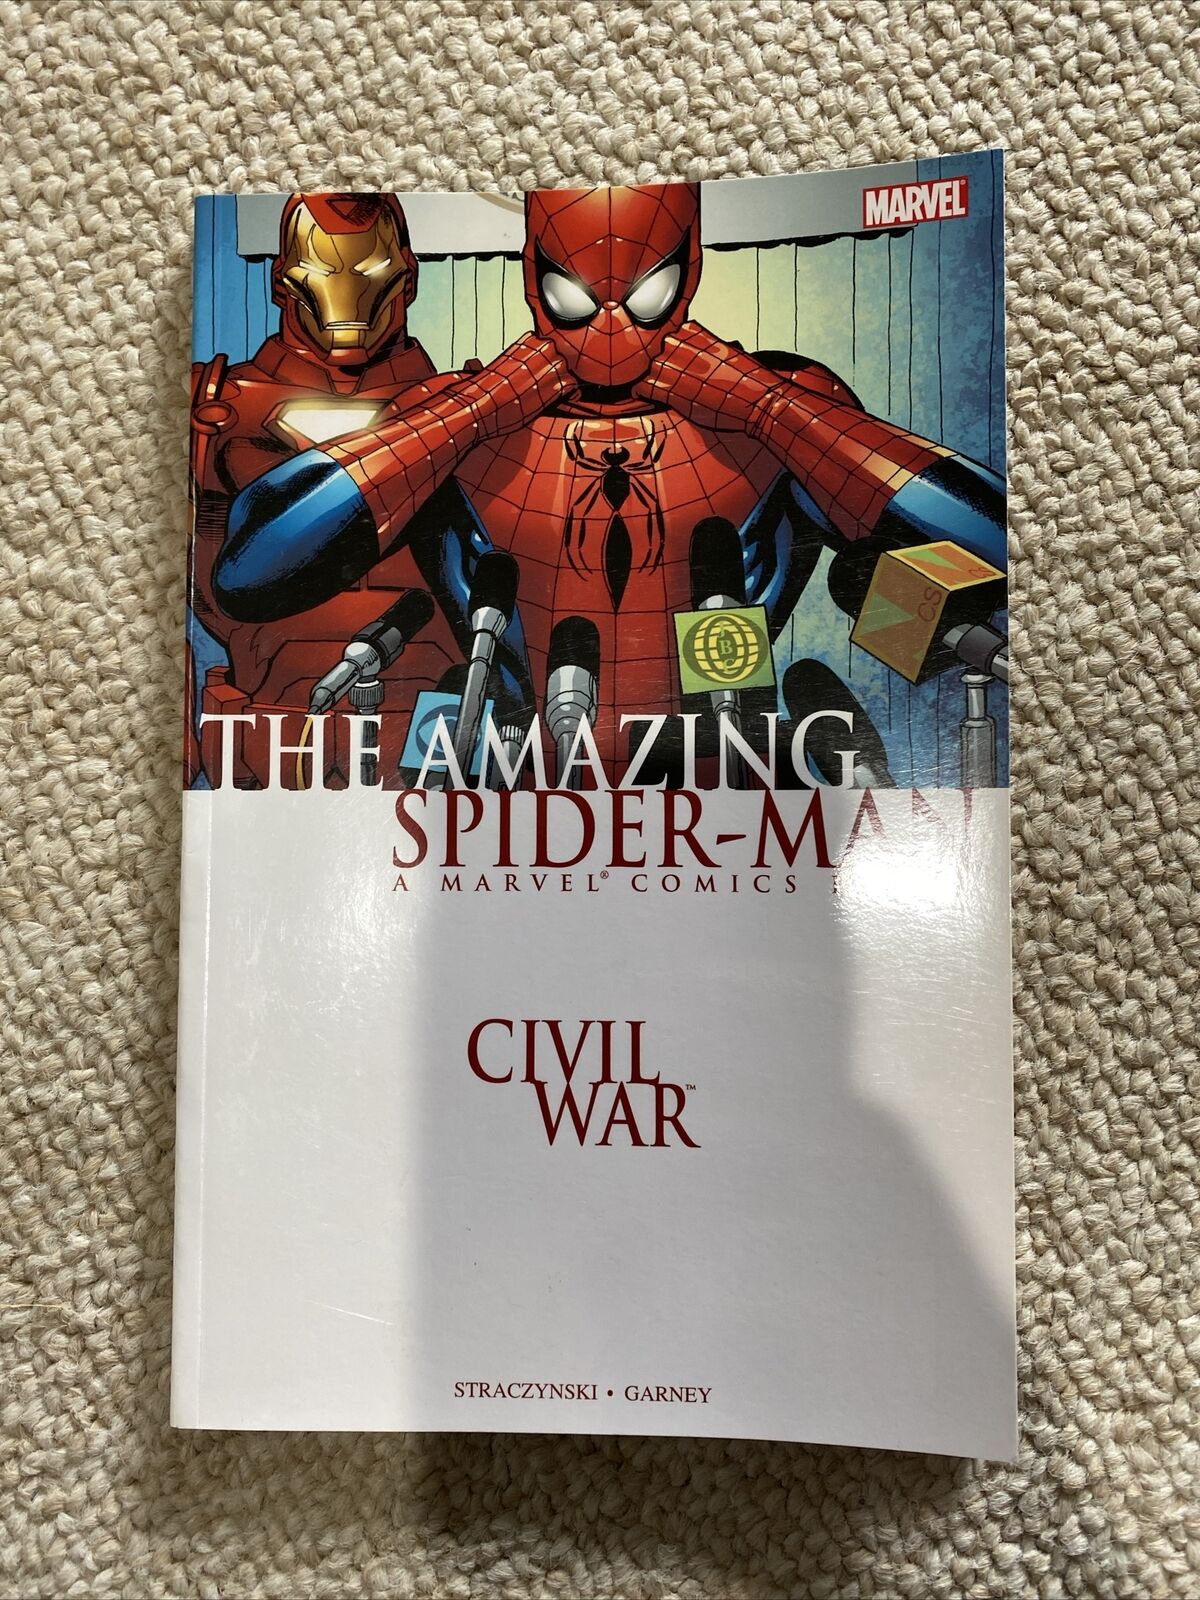 CIVIL WAR THE AMAZING SPIDER-MAN A Marvel Comics Event 2007